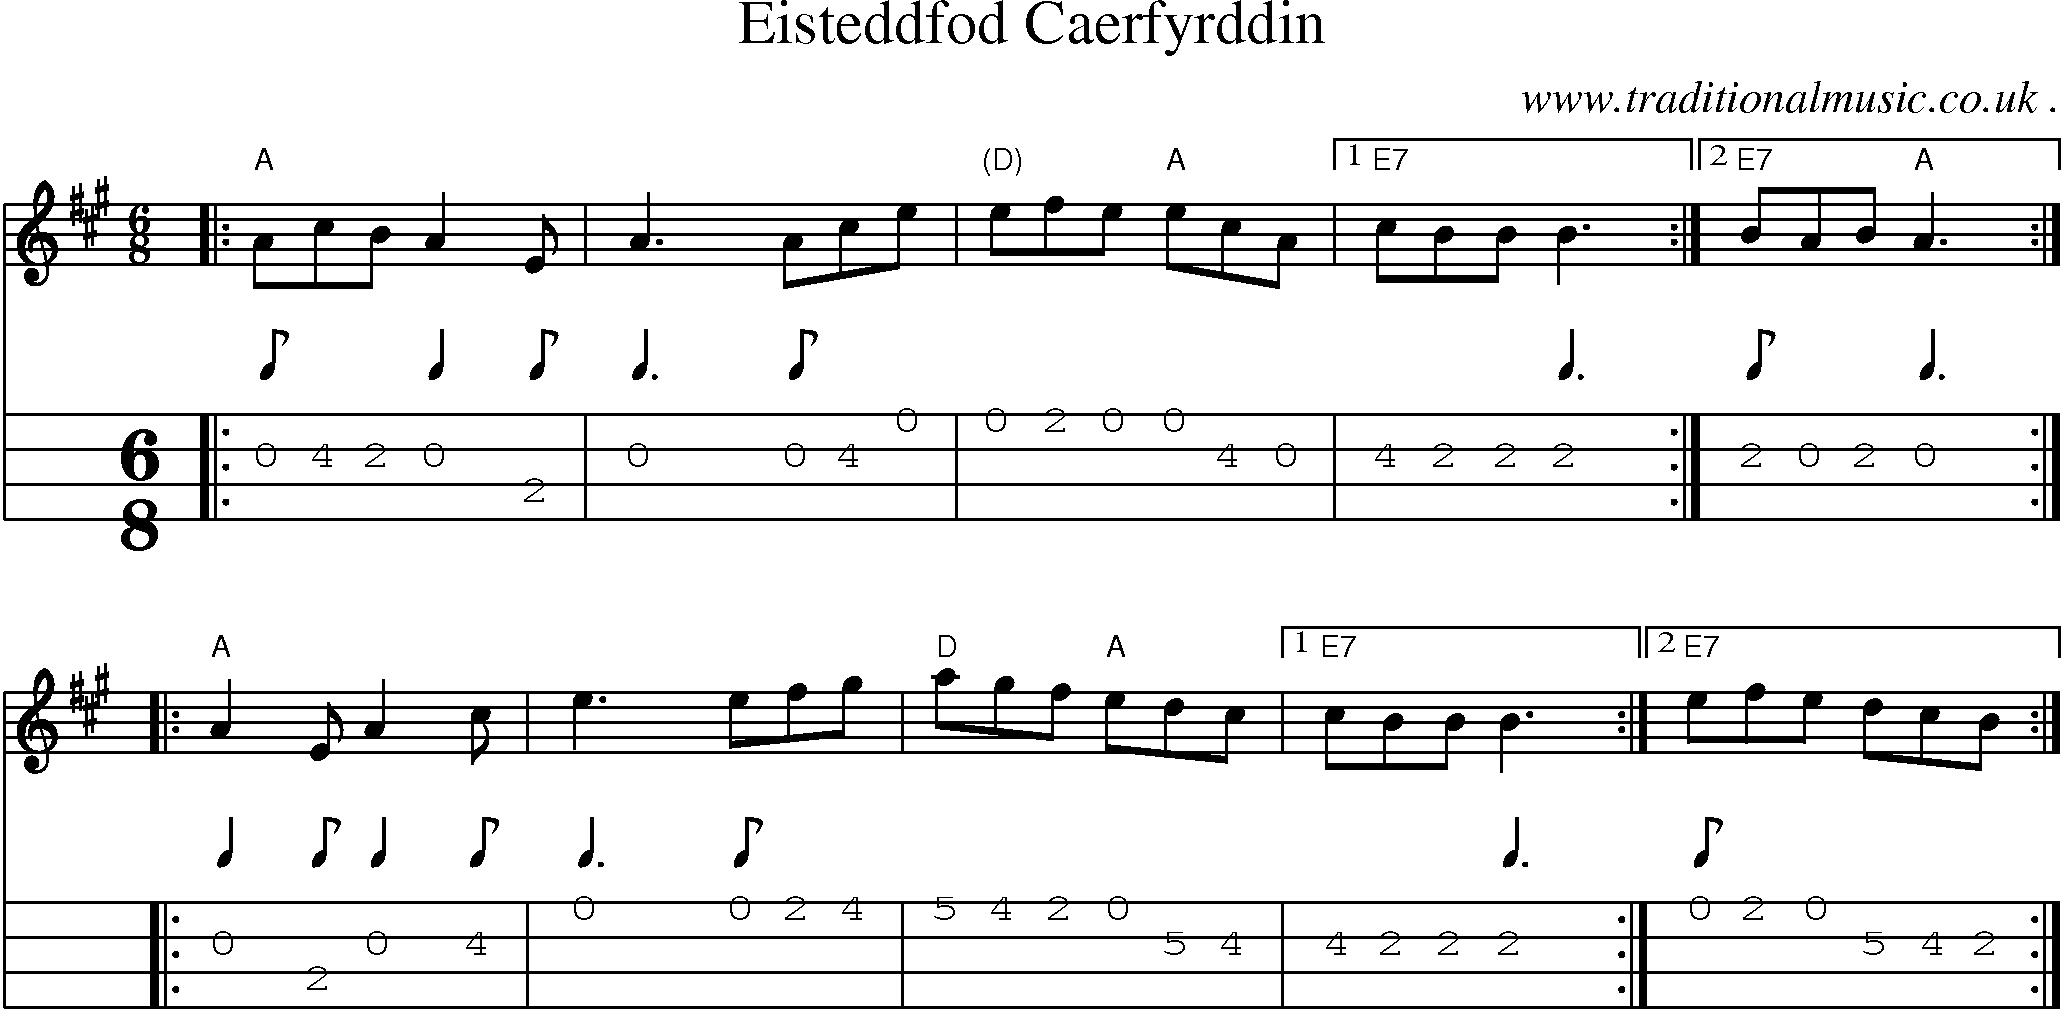 Sheet-music  score, Chords and Mandolin Tabs for Eisteddfod Caerfyrddin